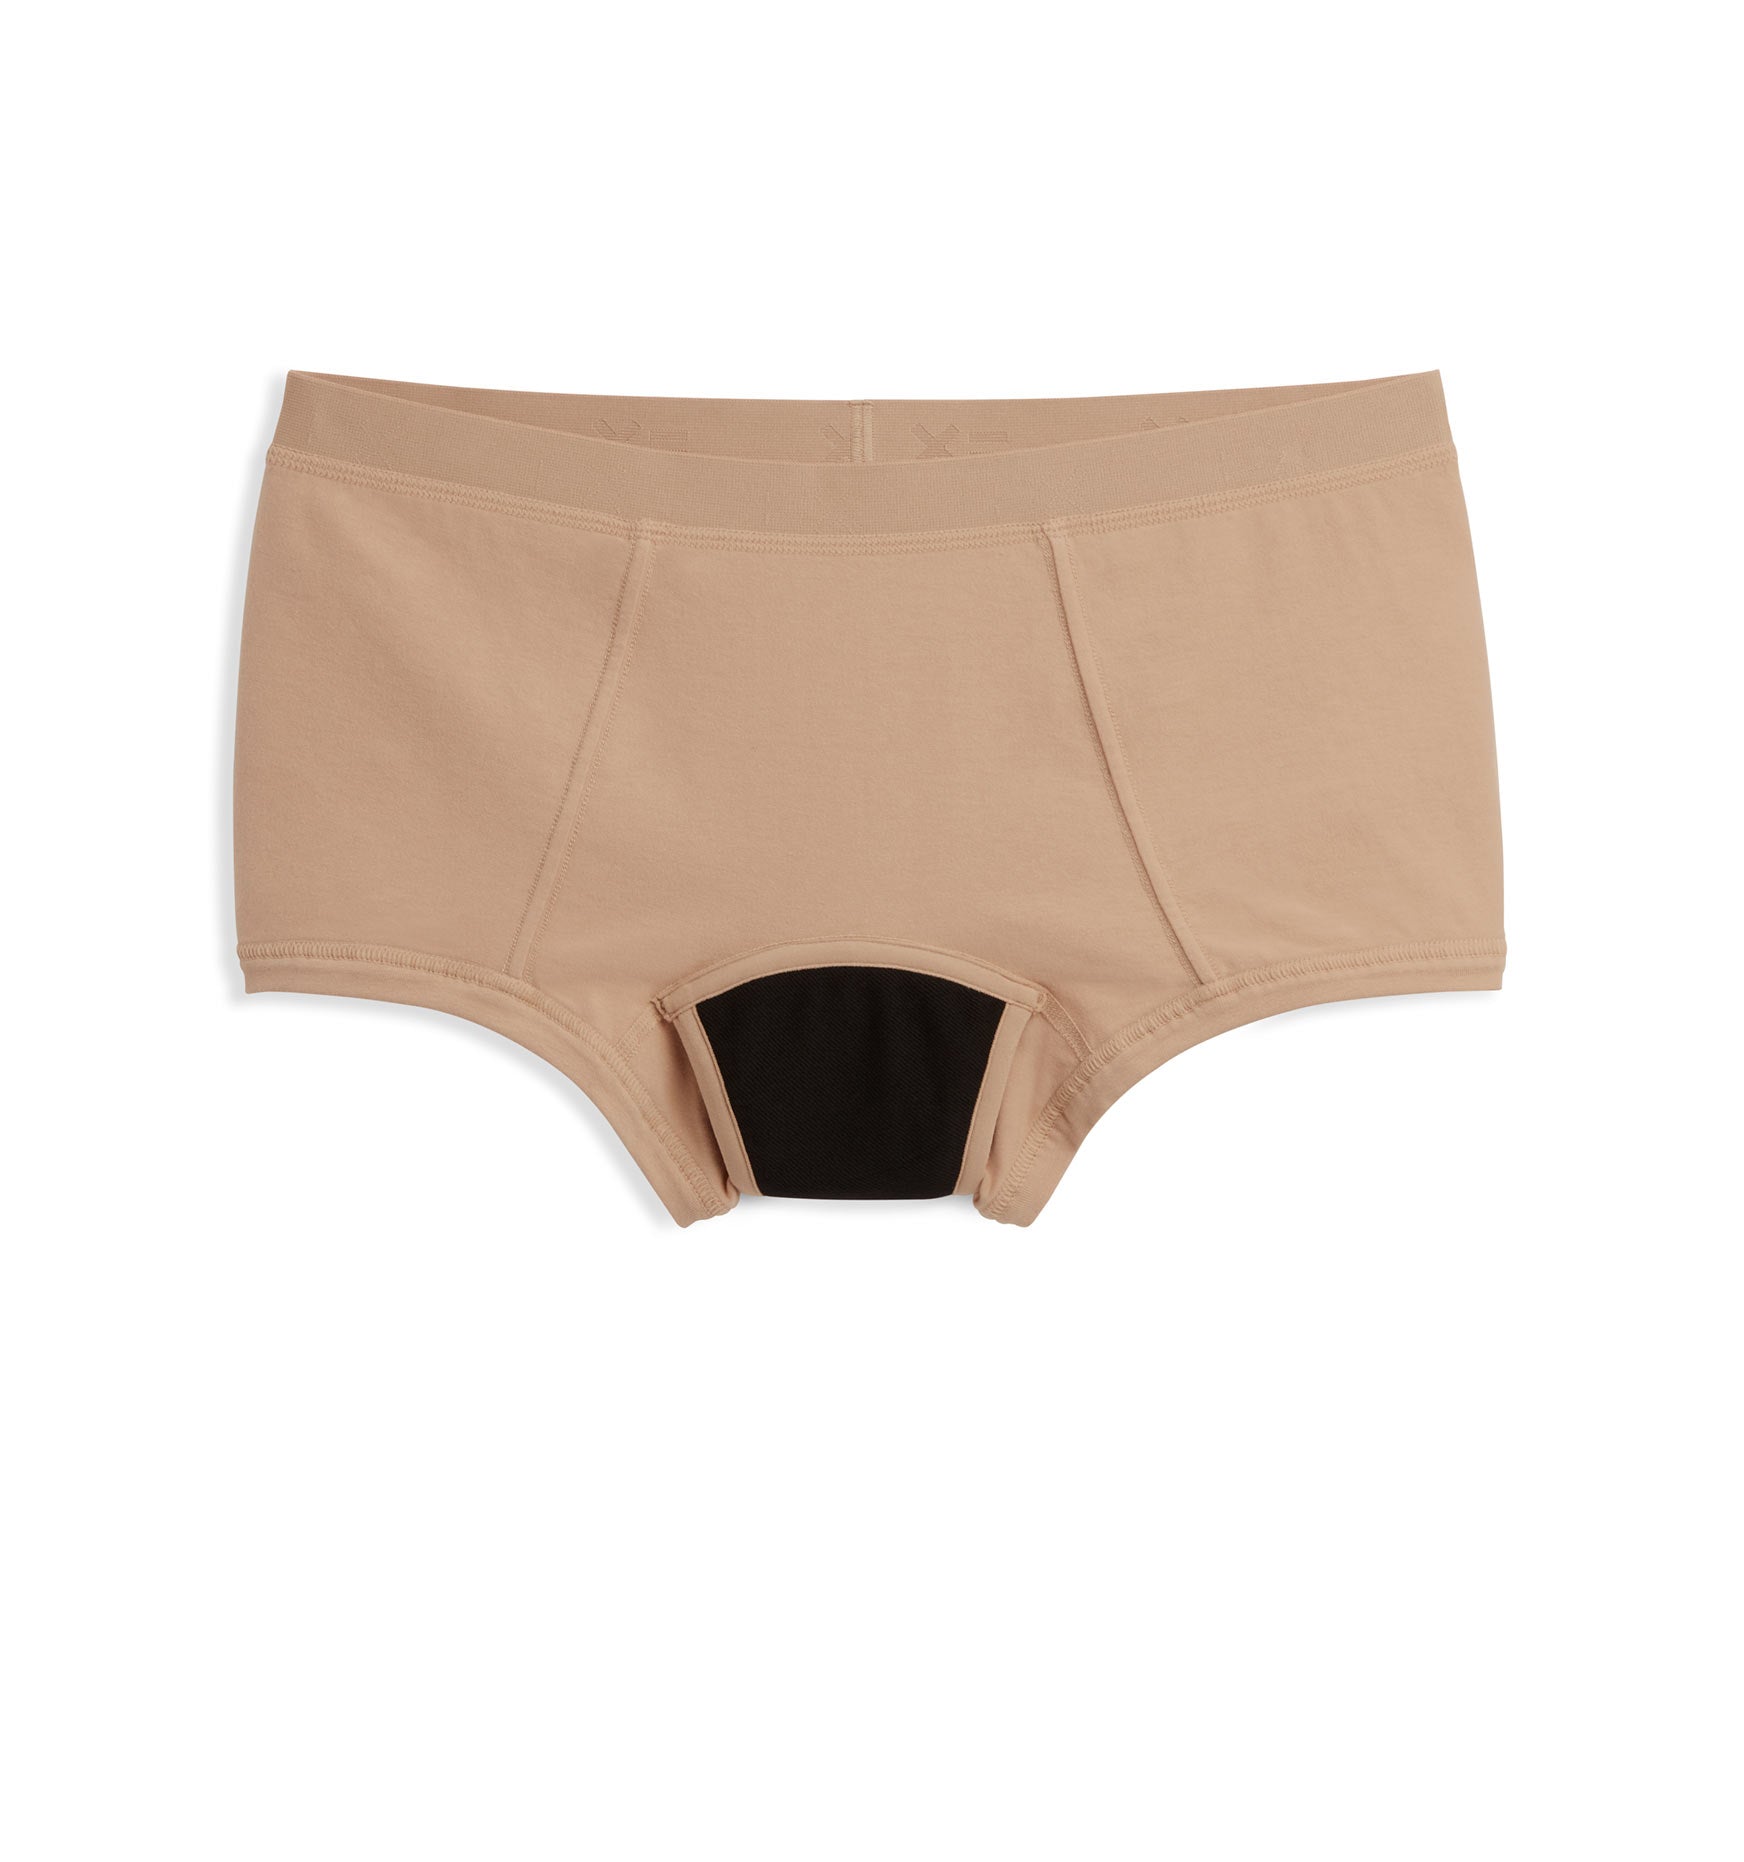 BoyShorts Panties for Women Seamless Soft Boy Shorts Nigeria